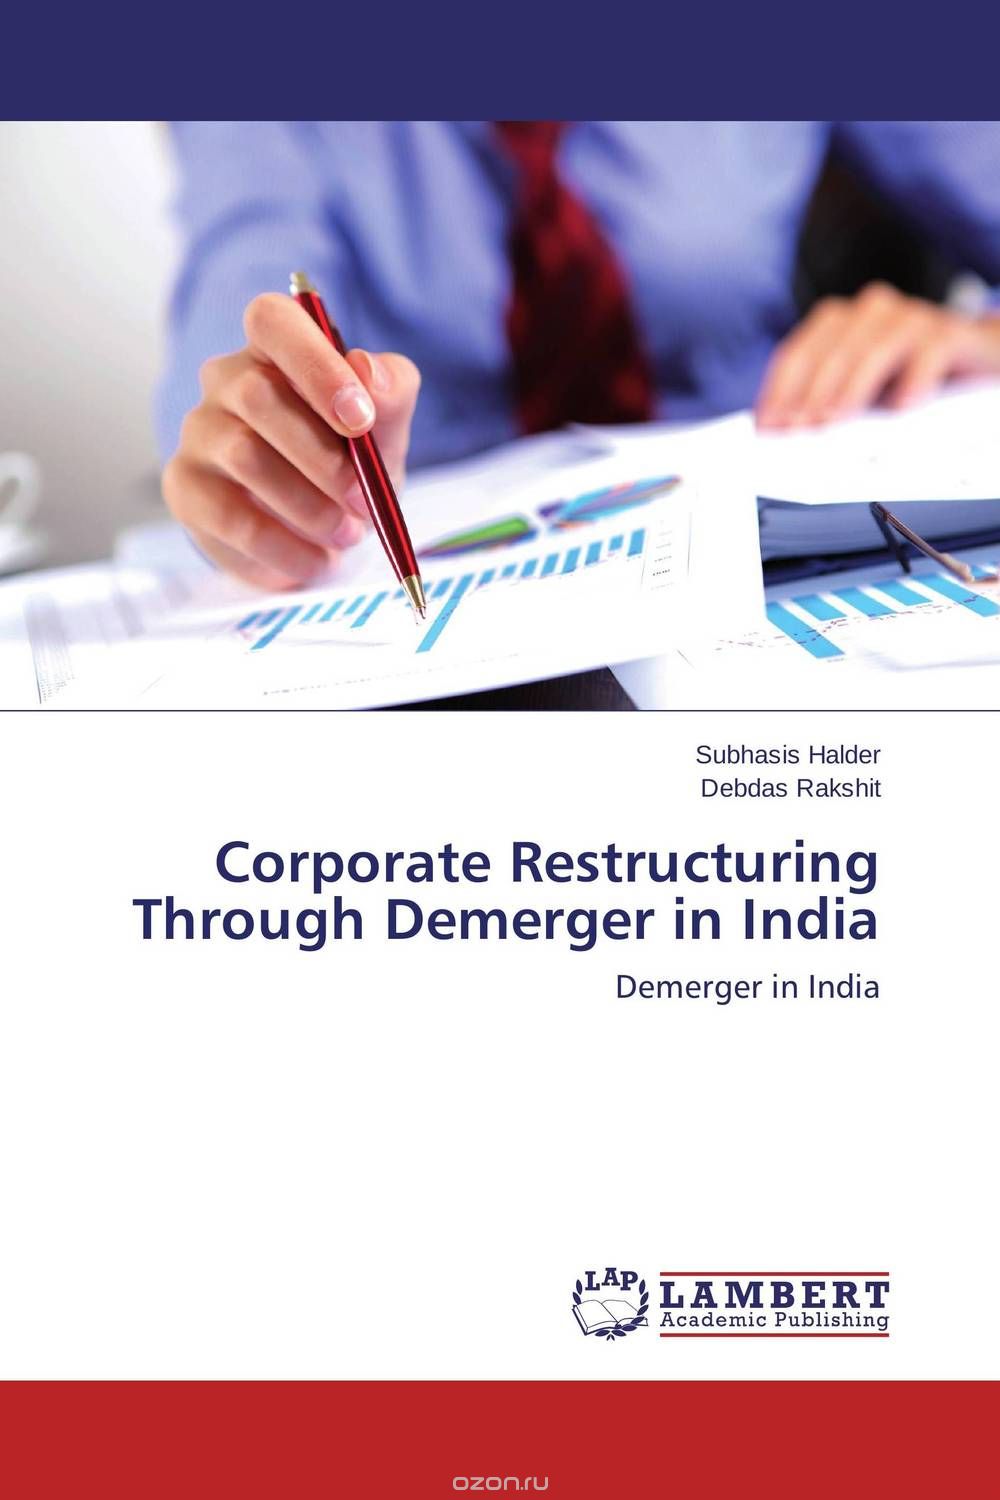 Скачать книгу "Corporate Restructuring Through Demerger in India"